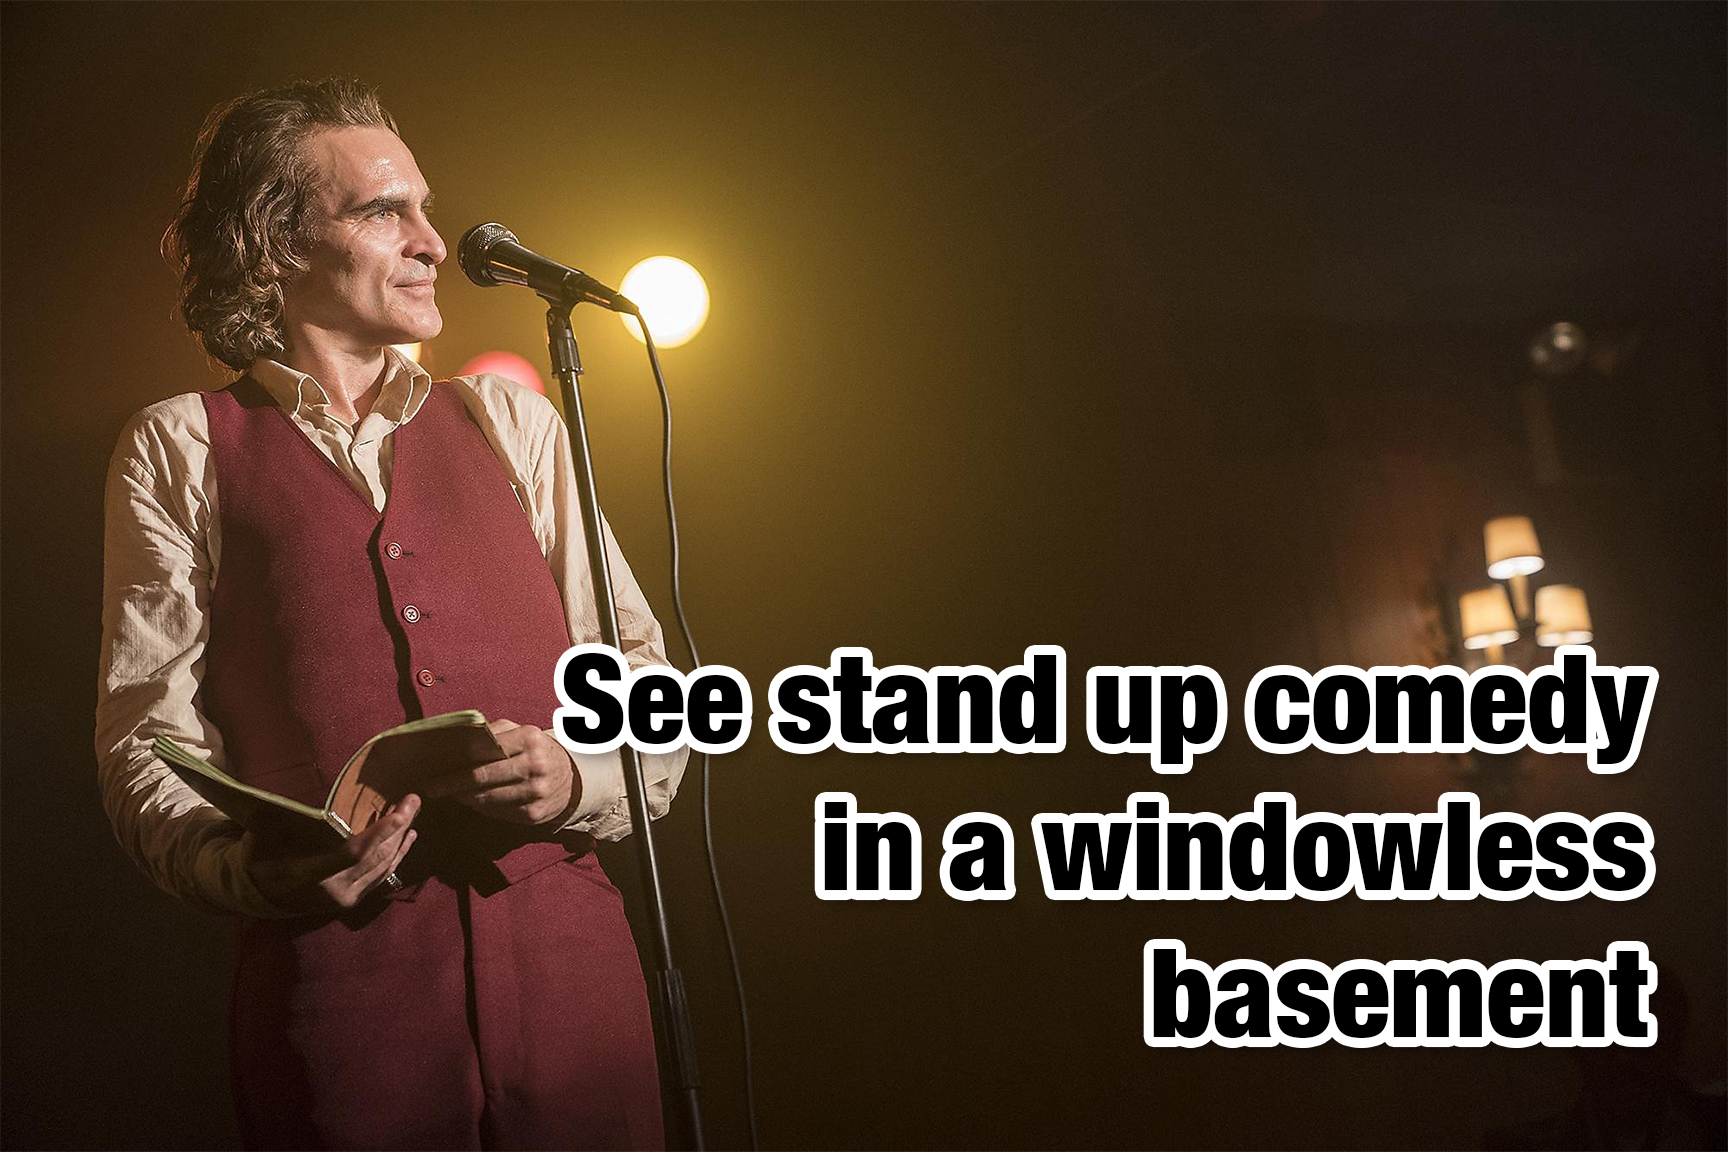 cool pics - joker jokes scene - See stand up comedy in a windowless basement